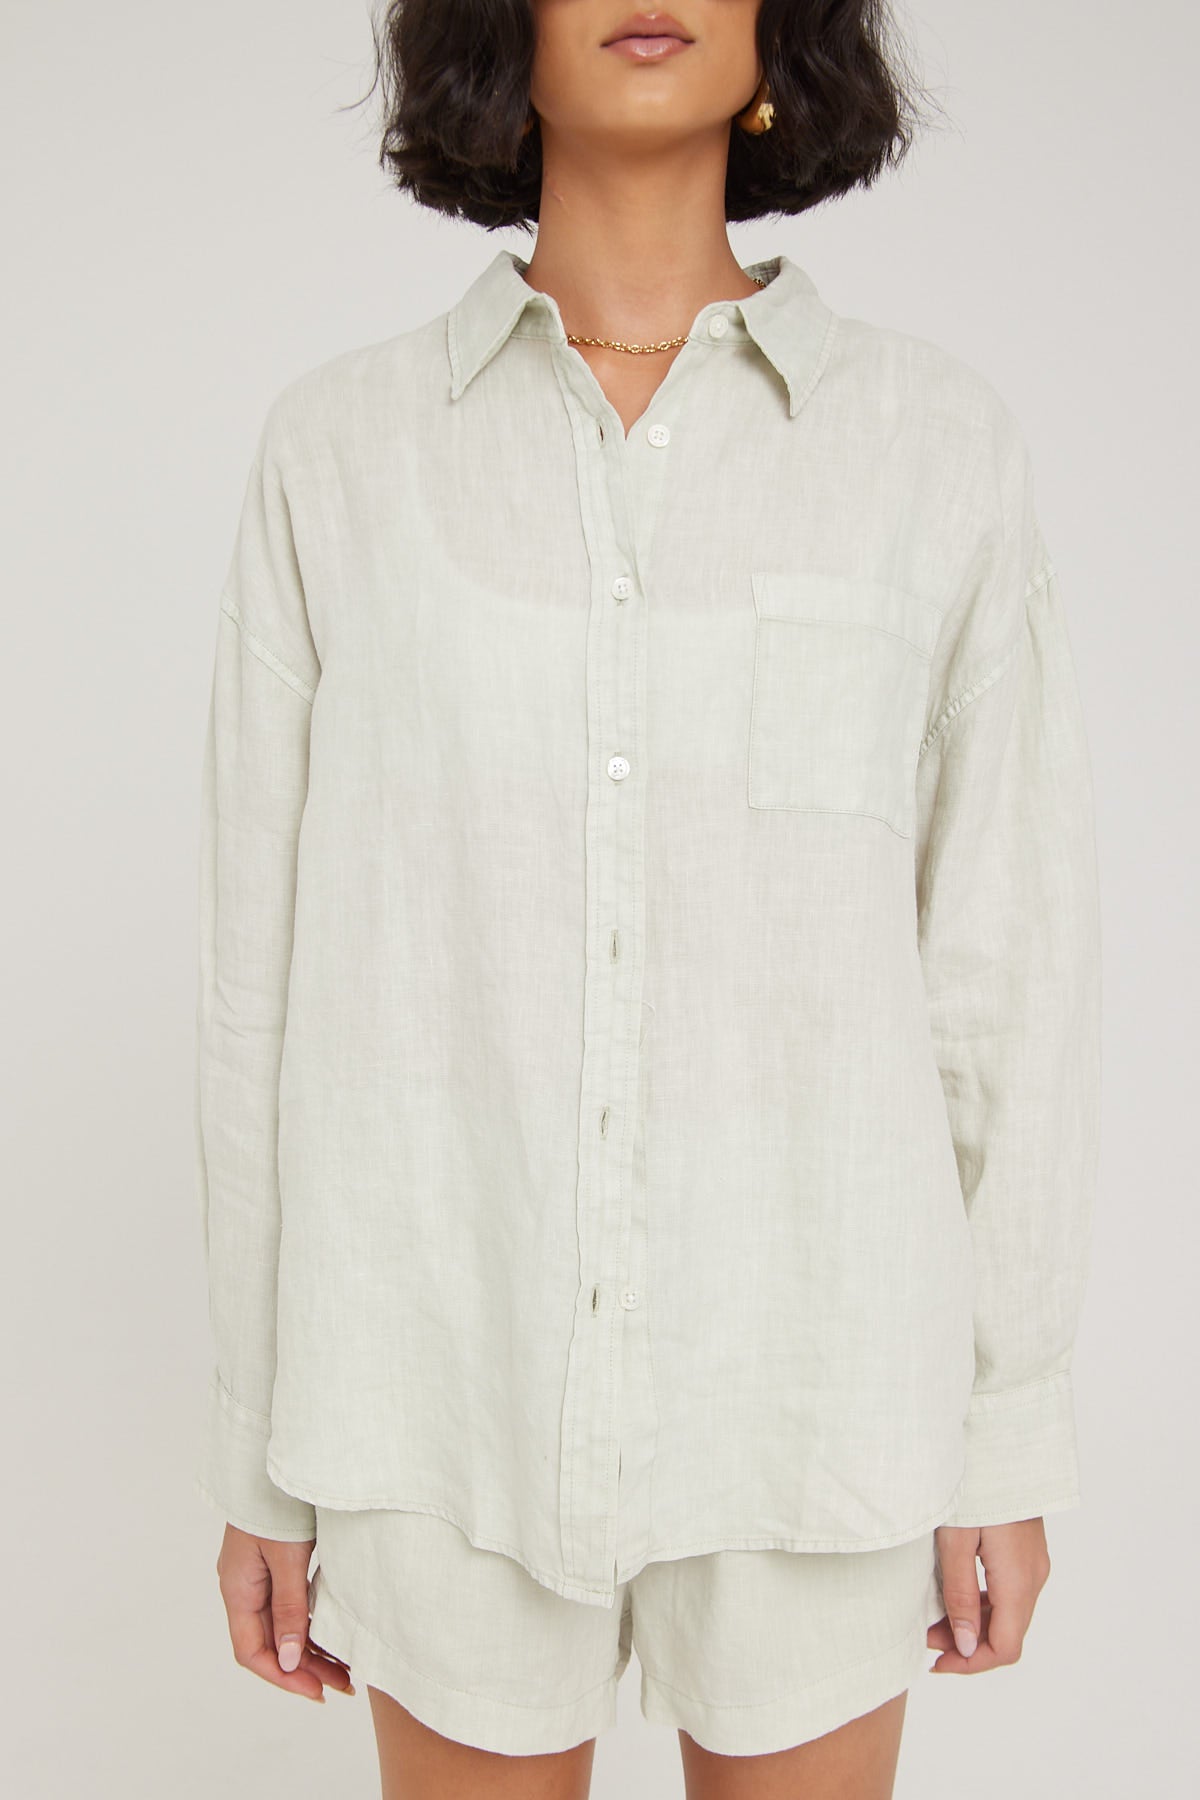 Academy Brand Hampton Linen Shirt Sage Green – Universal Store